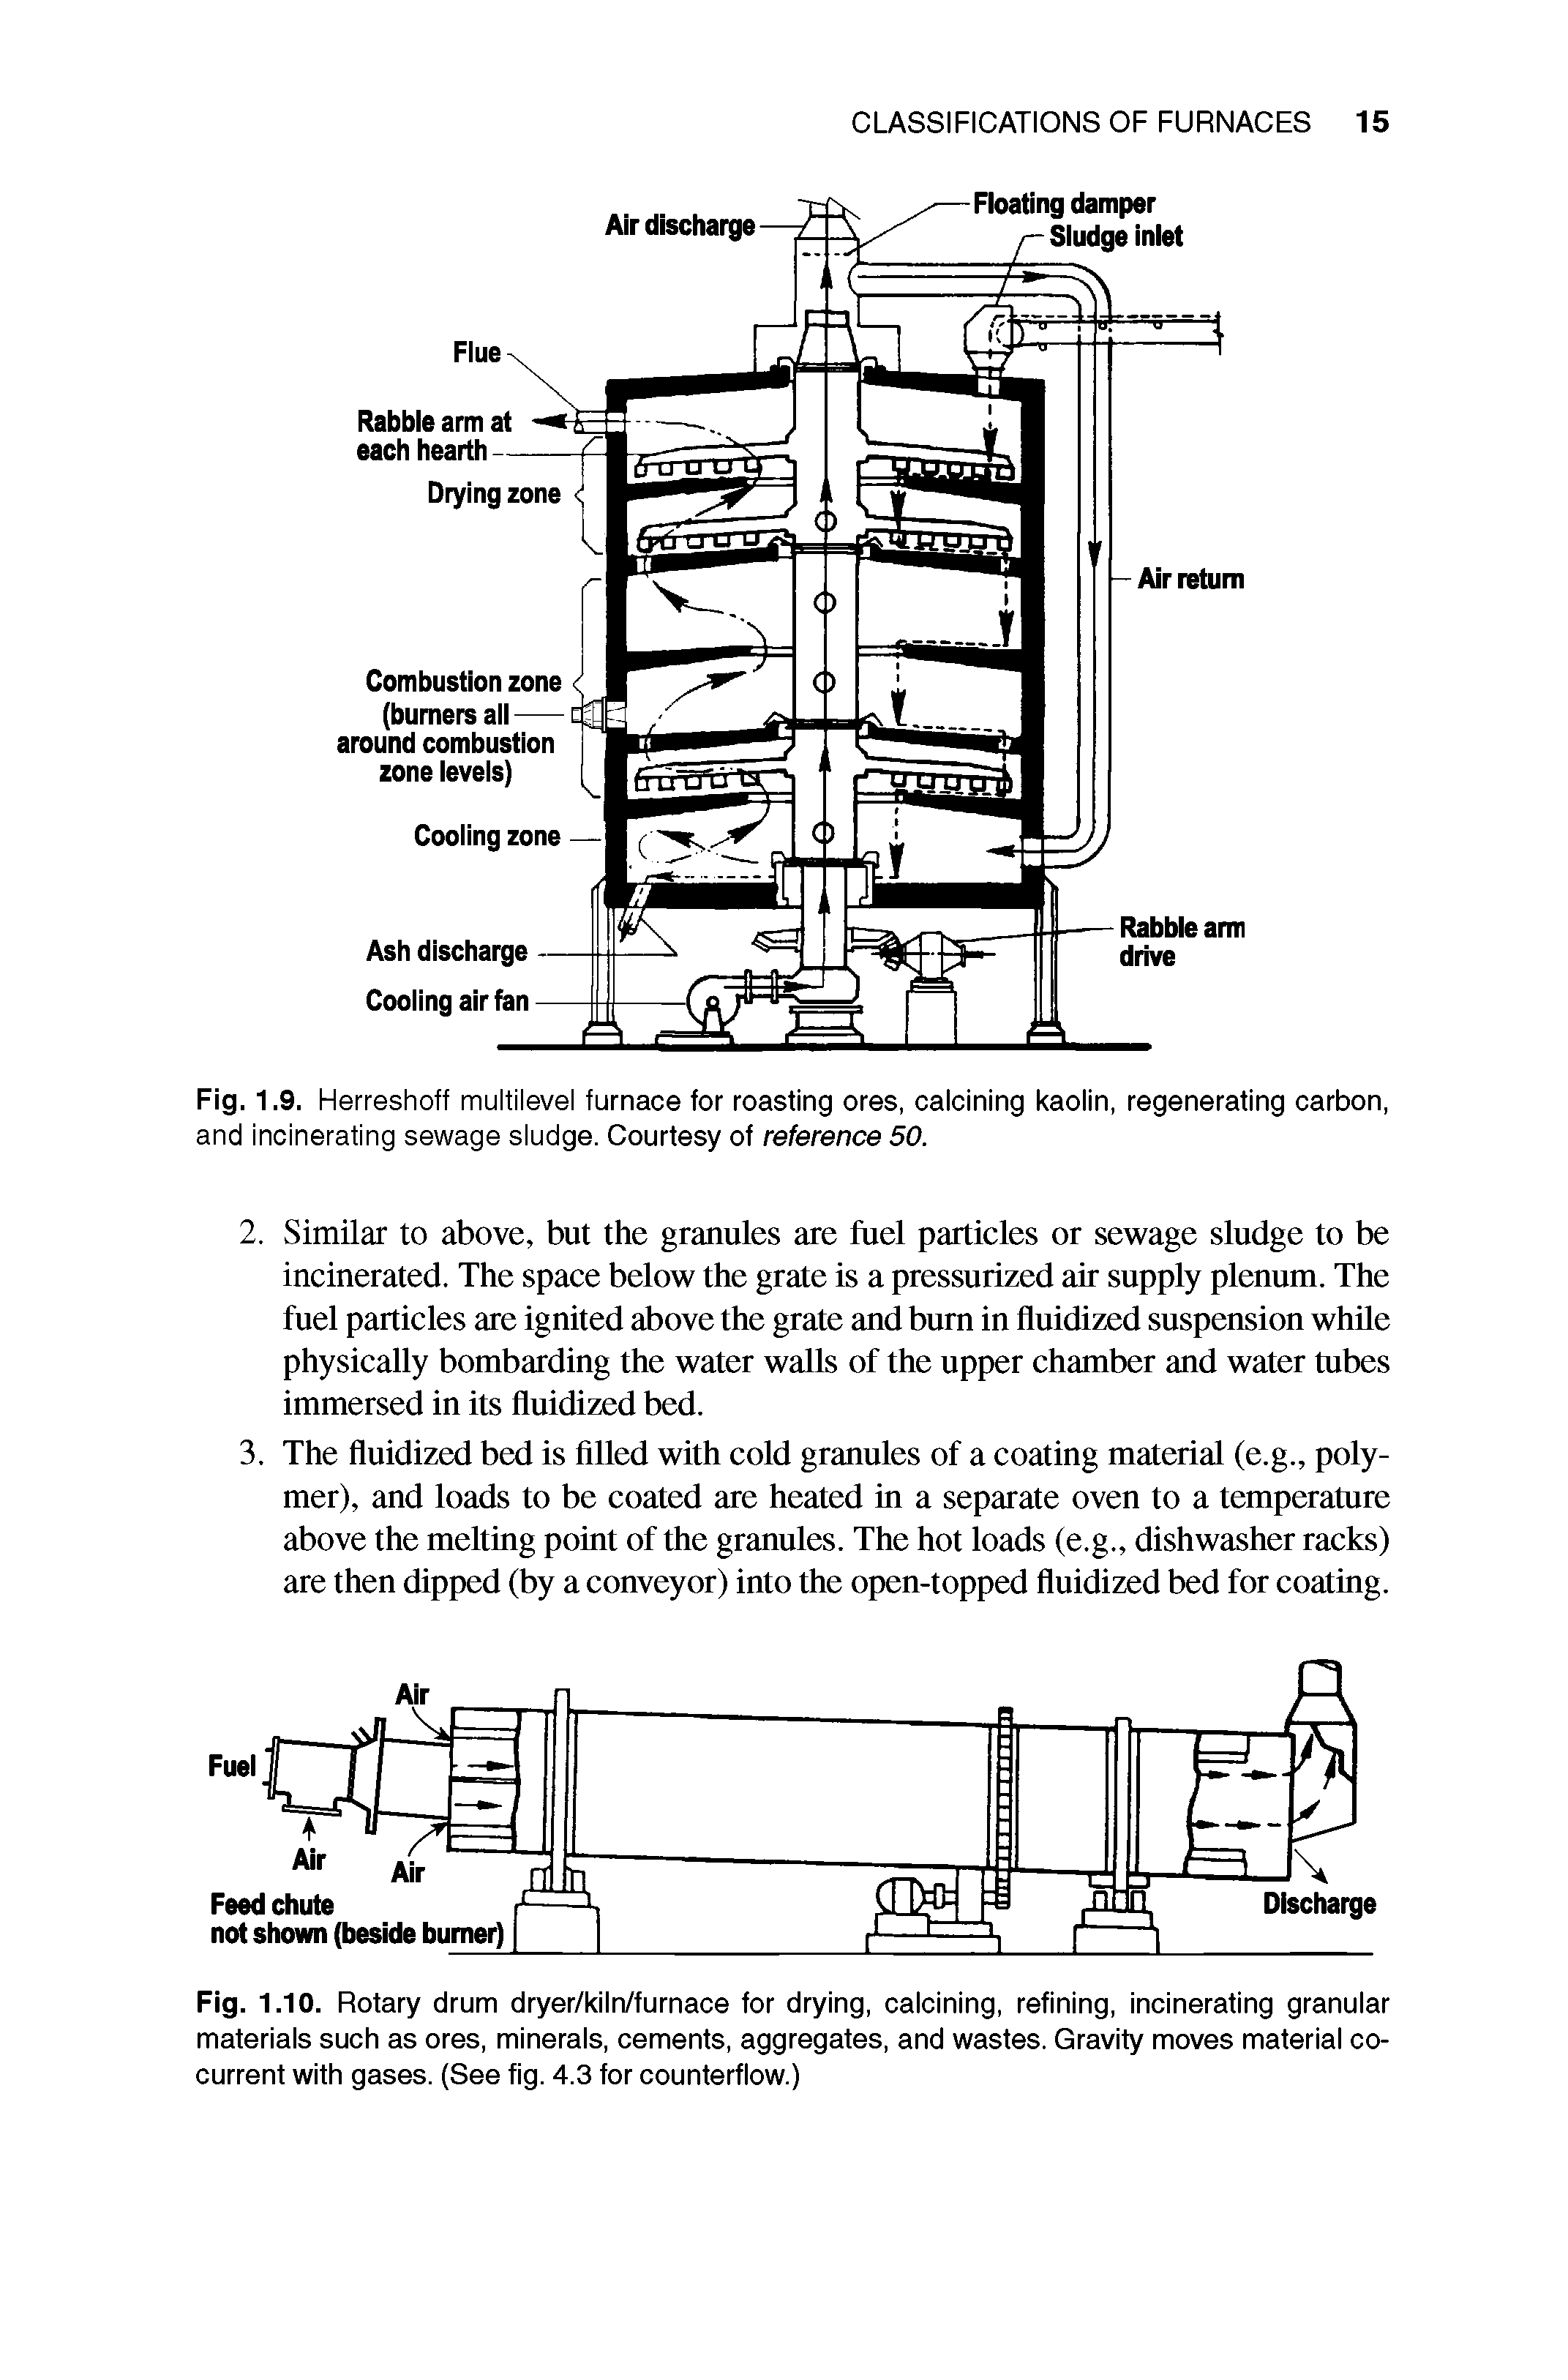 Fig. 1.9. Herreshoff multilevel furnace for roasting ores, calcining kaolin, regenerating carbon, and incinerating sewage sludge. Courtesy of reference 50.